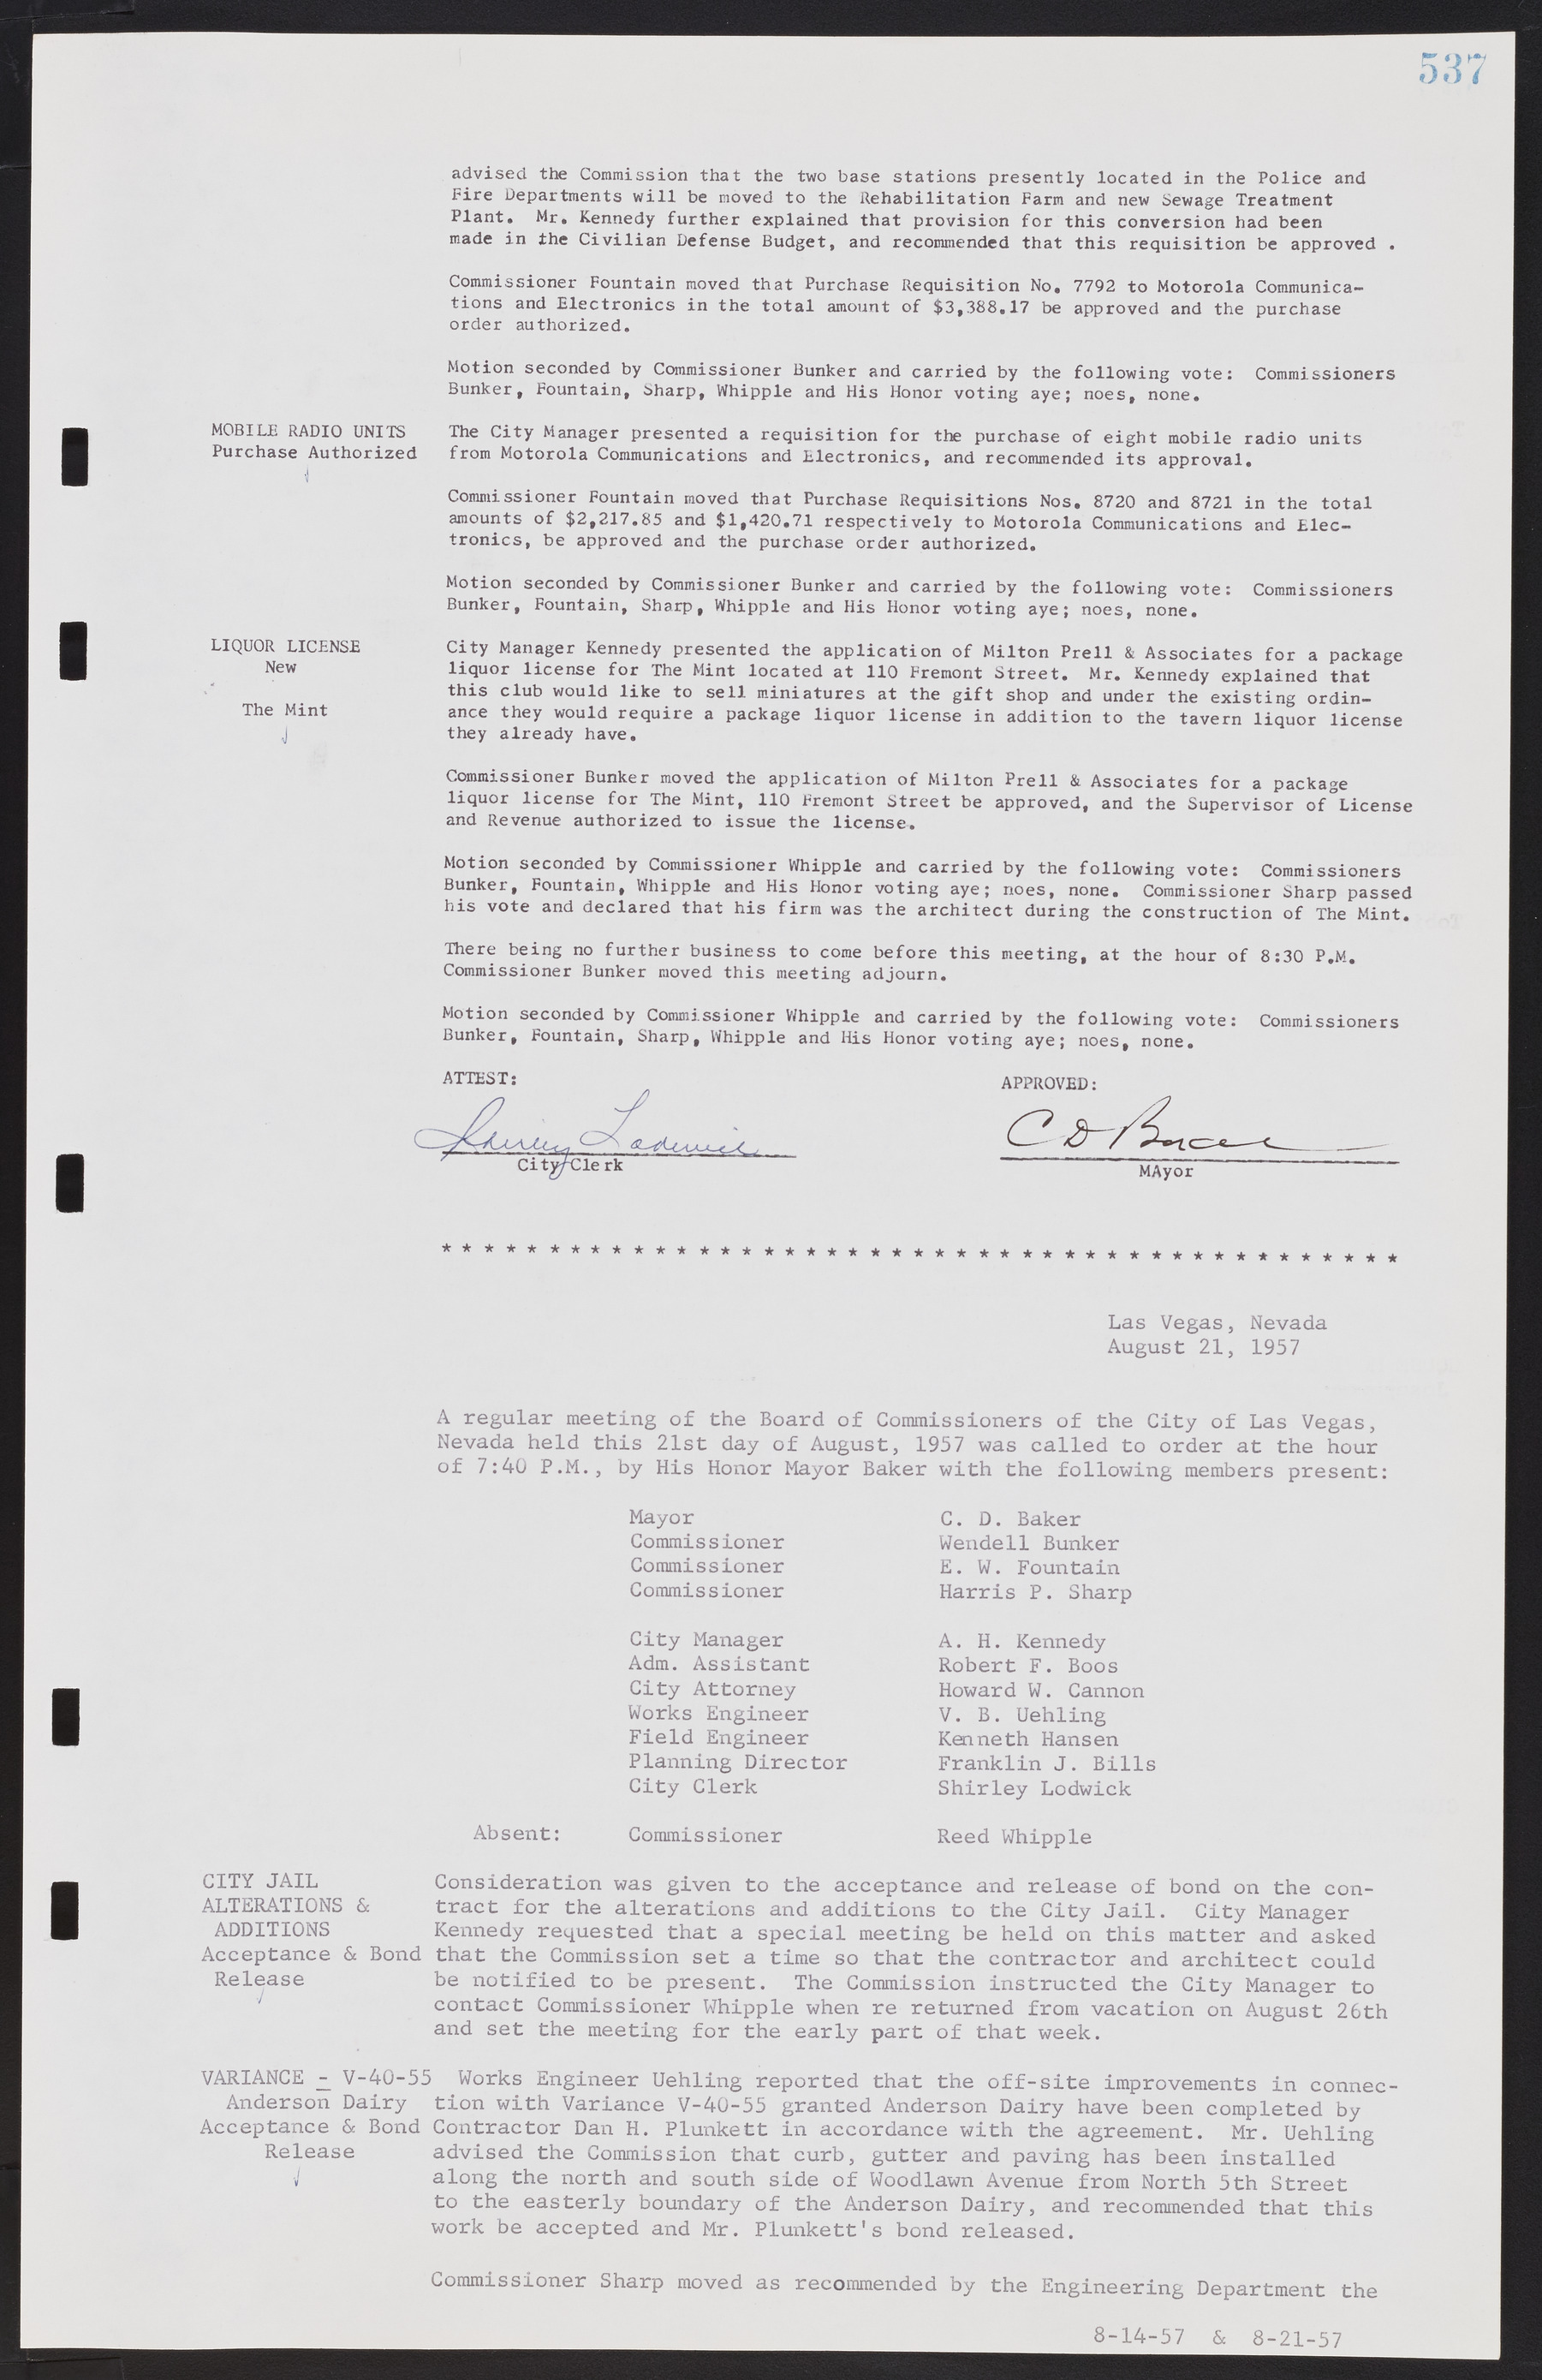 Las Vegas City Commission Minutes, September 21, 1955 to November 20, 1957, lvc000010-557